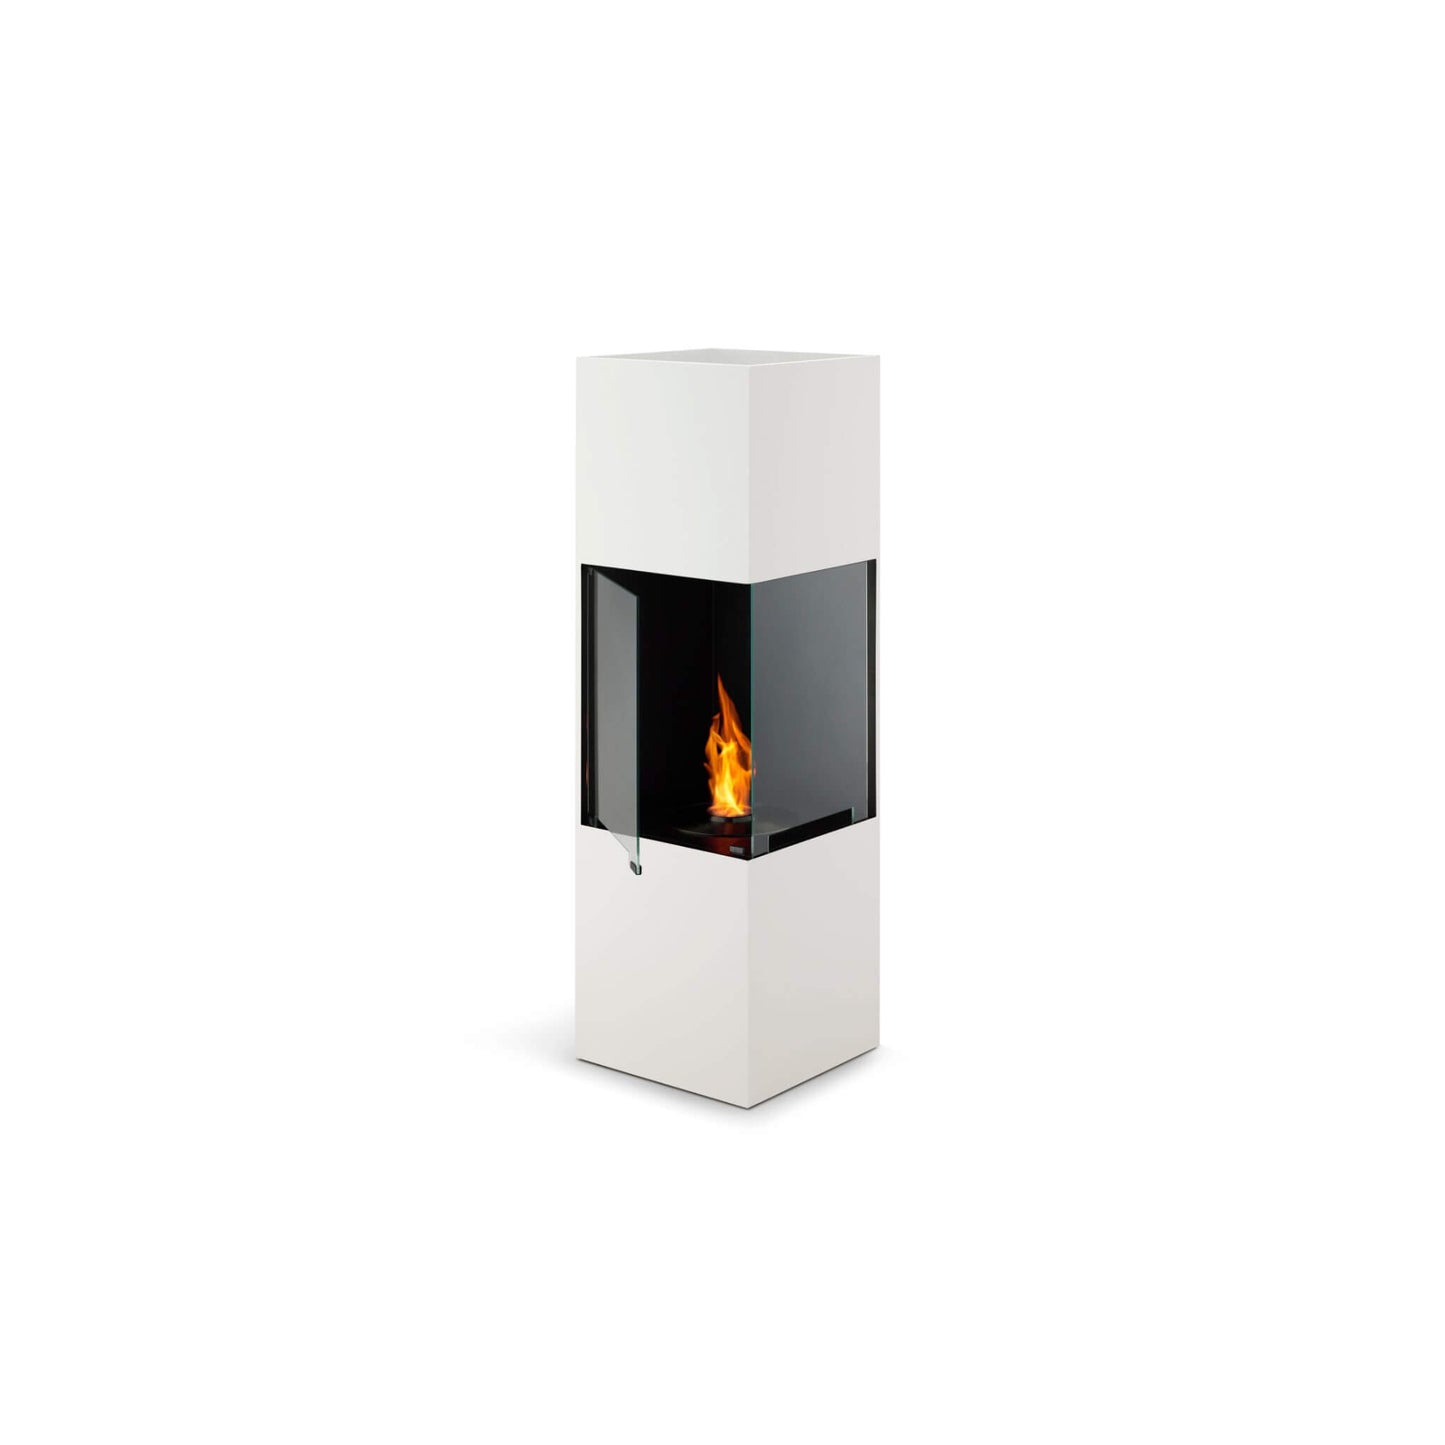 Ecosmart Fire Be Designer Freestanding Bioethanol Fireplace